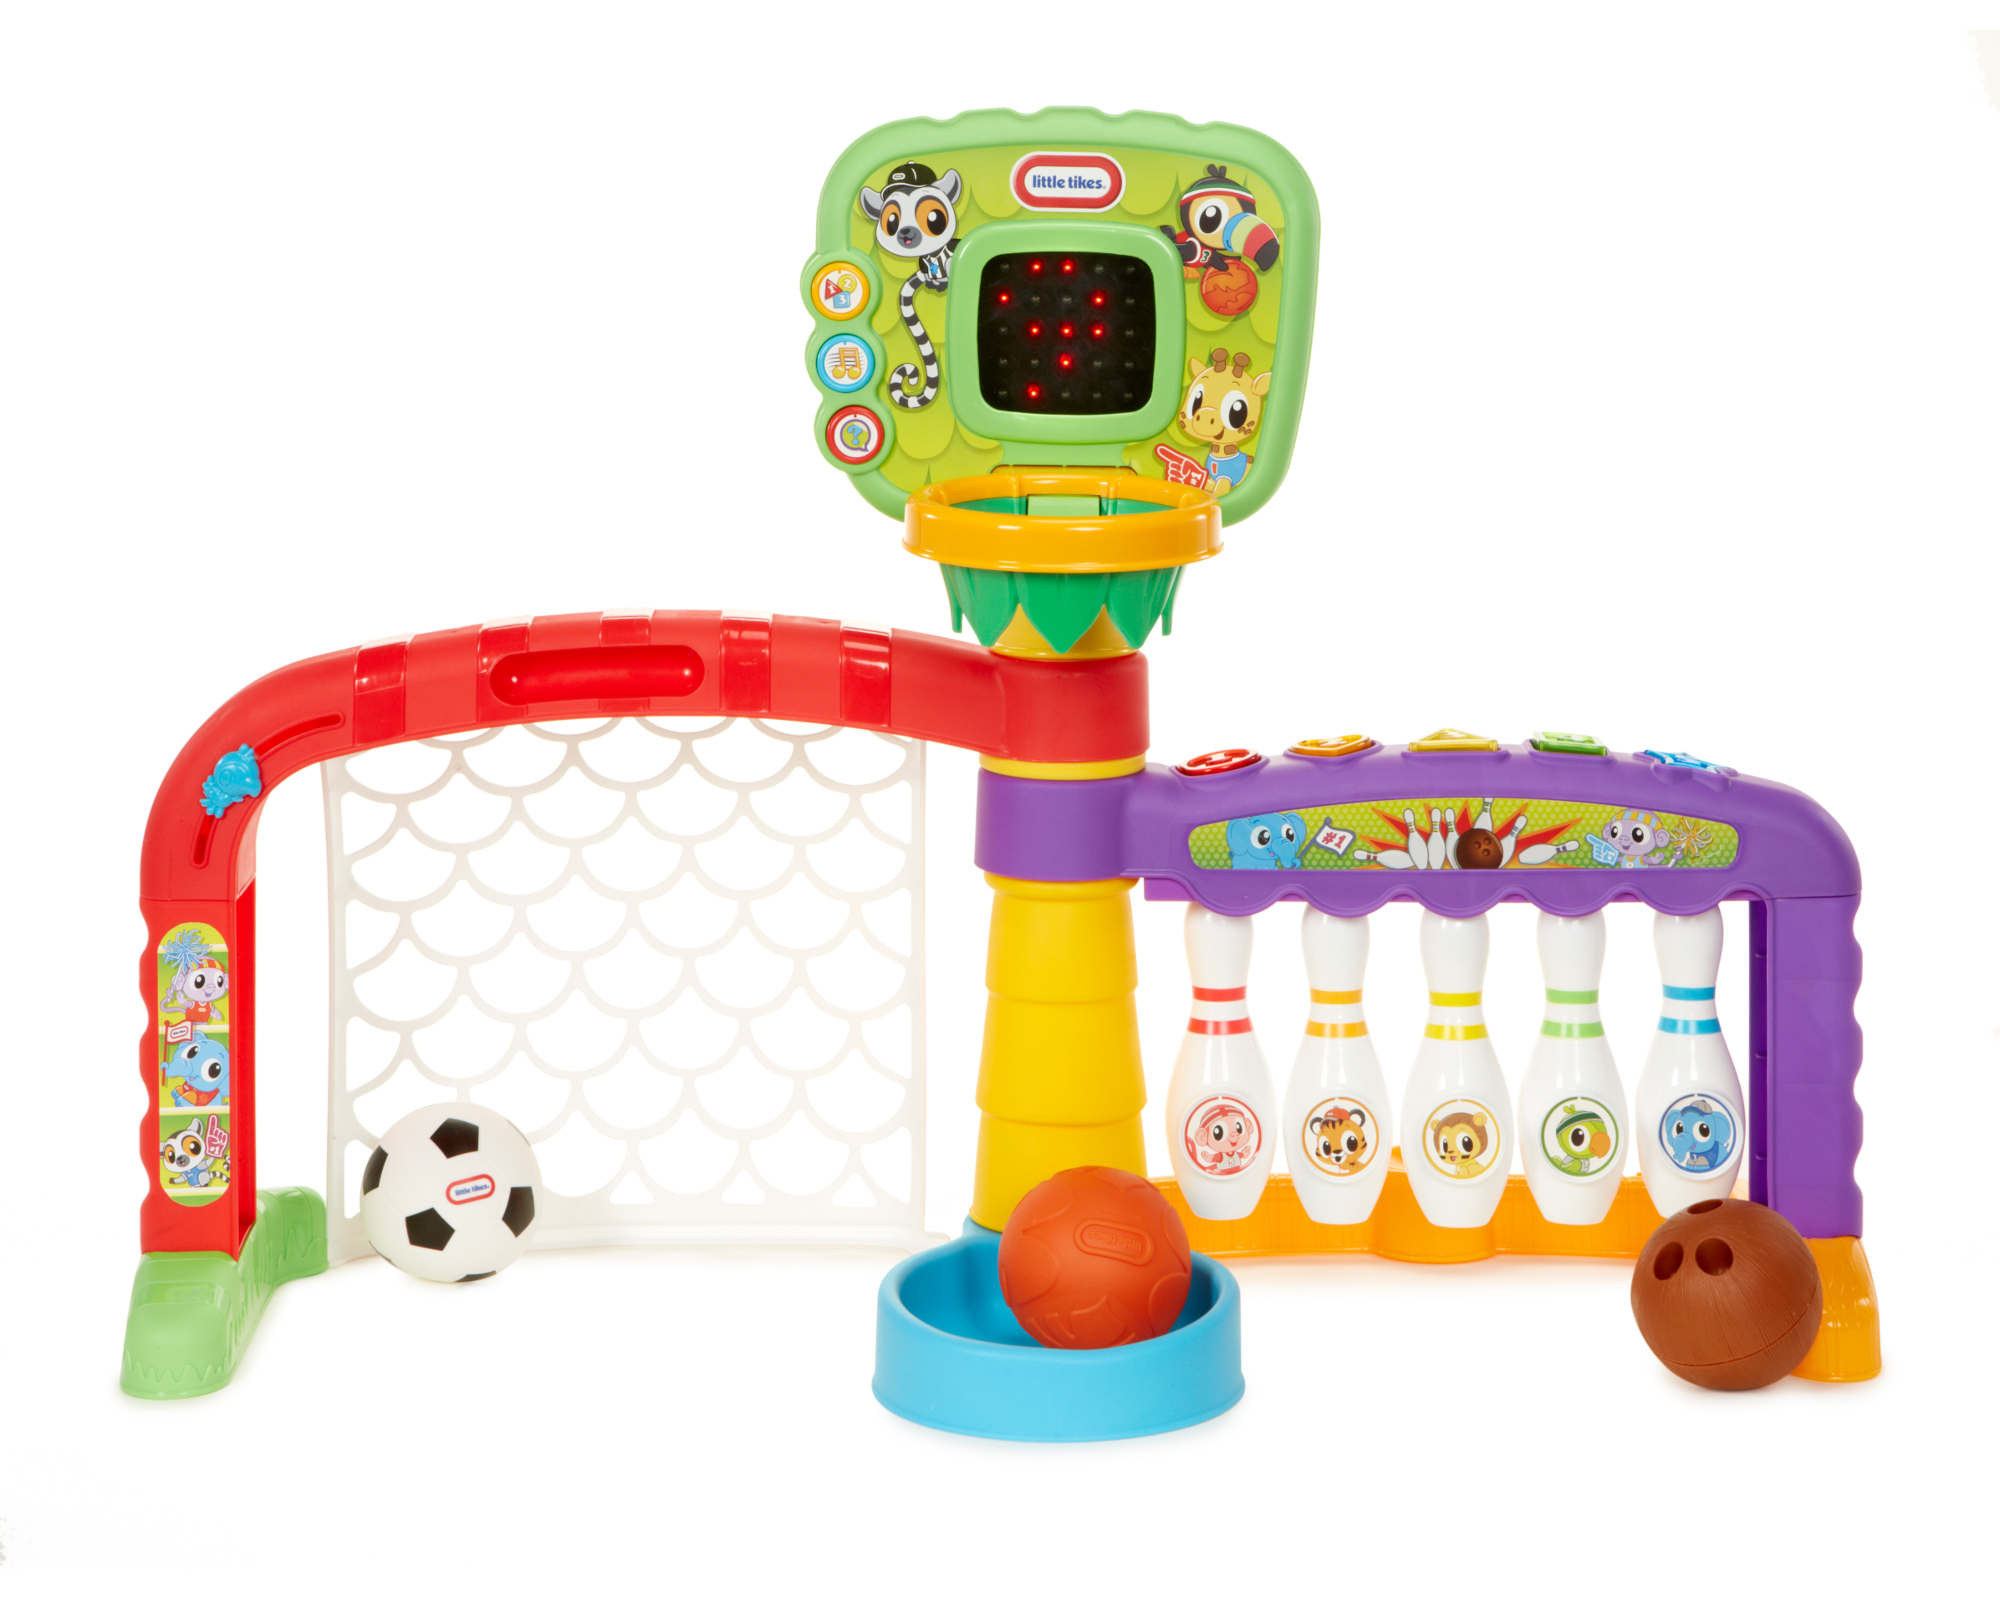 Спортивно интерактивный. Интерактивный спортивный центр little Tikes GXP-623254 3in1. Интерактивная развивающая игрушка little Tikes спортивный центр. Спортивные игрушки для детей от 3 лет. Спортивные игрушки для детей от 5.